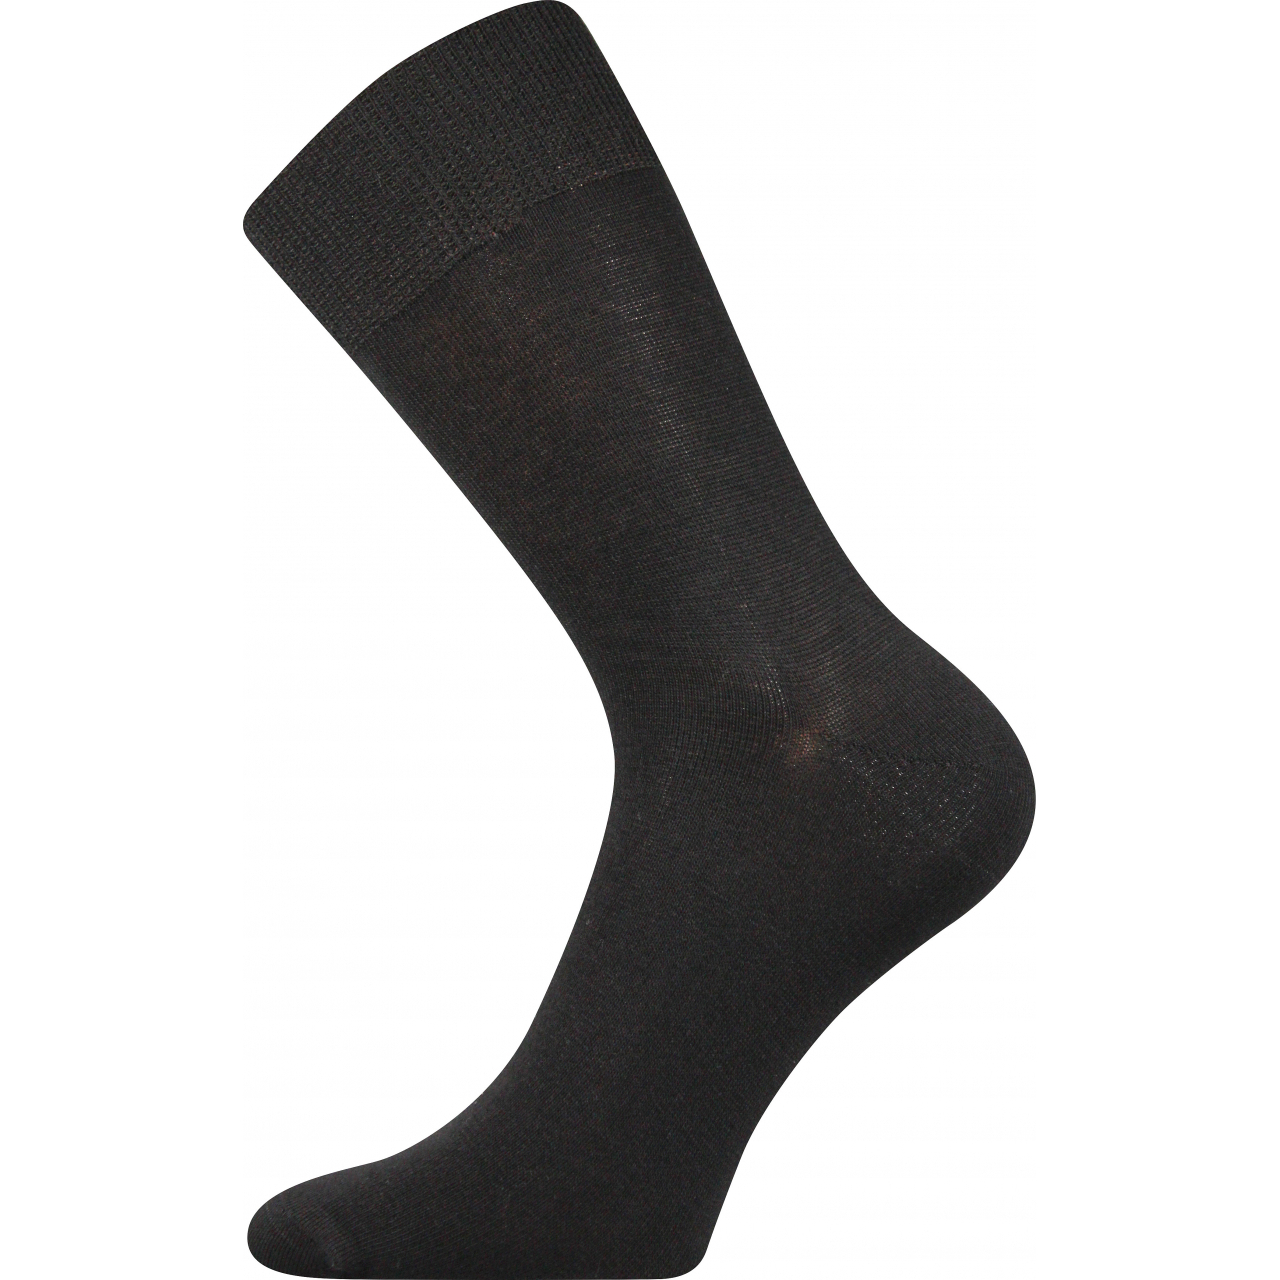 Ponožky unisex klasické Boma Radovan-a - černé, 39-42